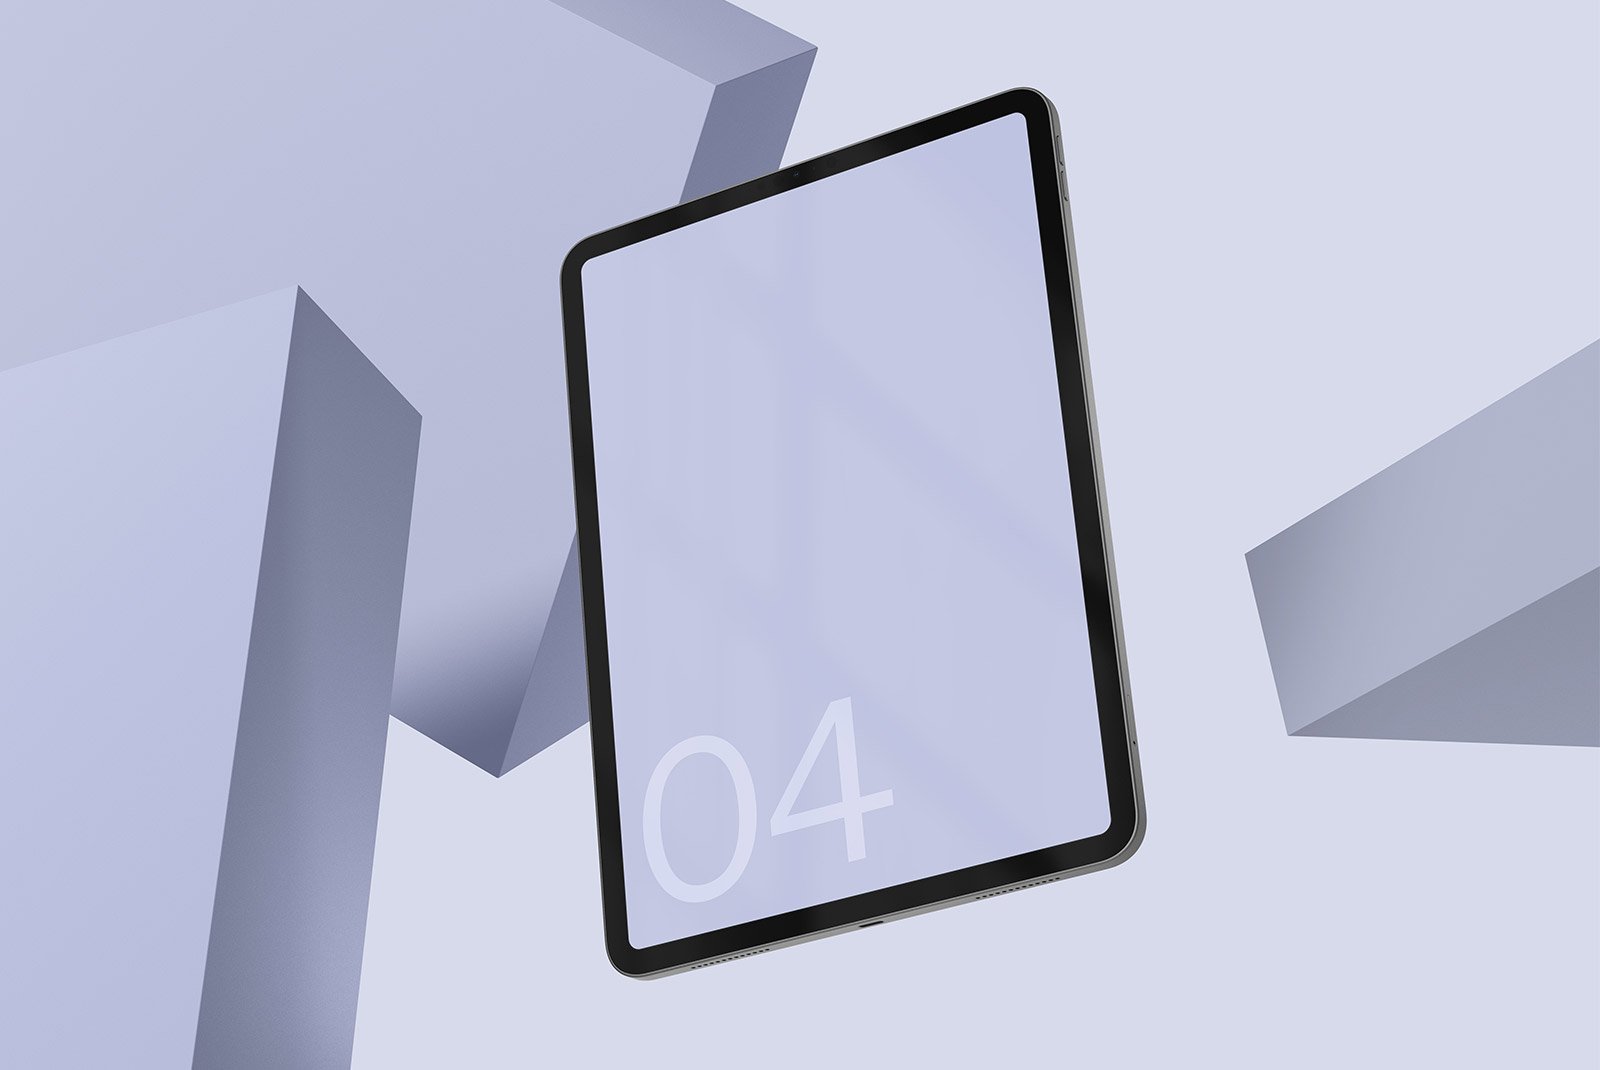 iPad Pro 04 Standard Mockup cover image.